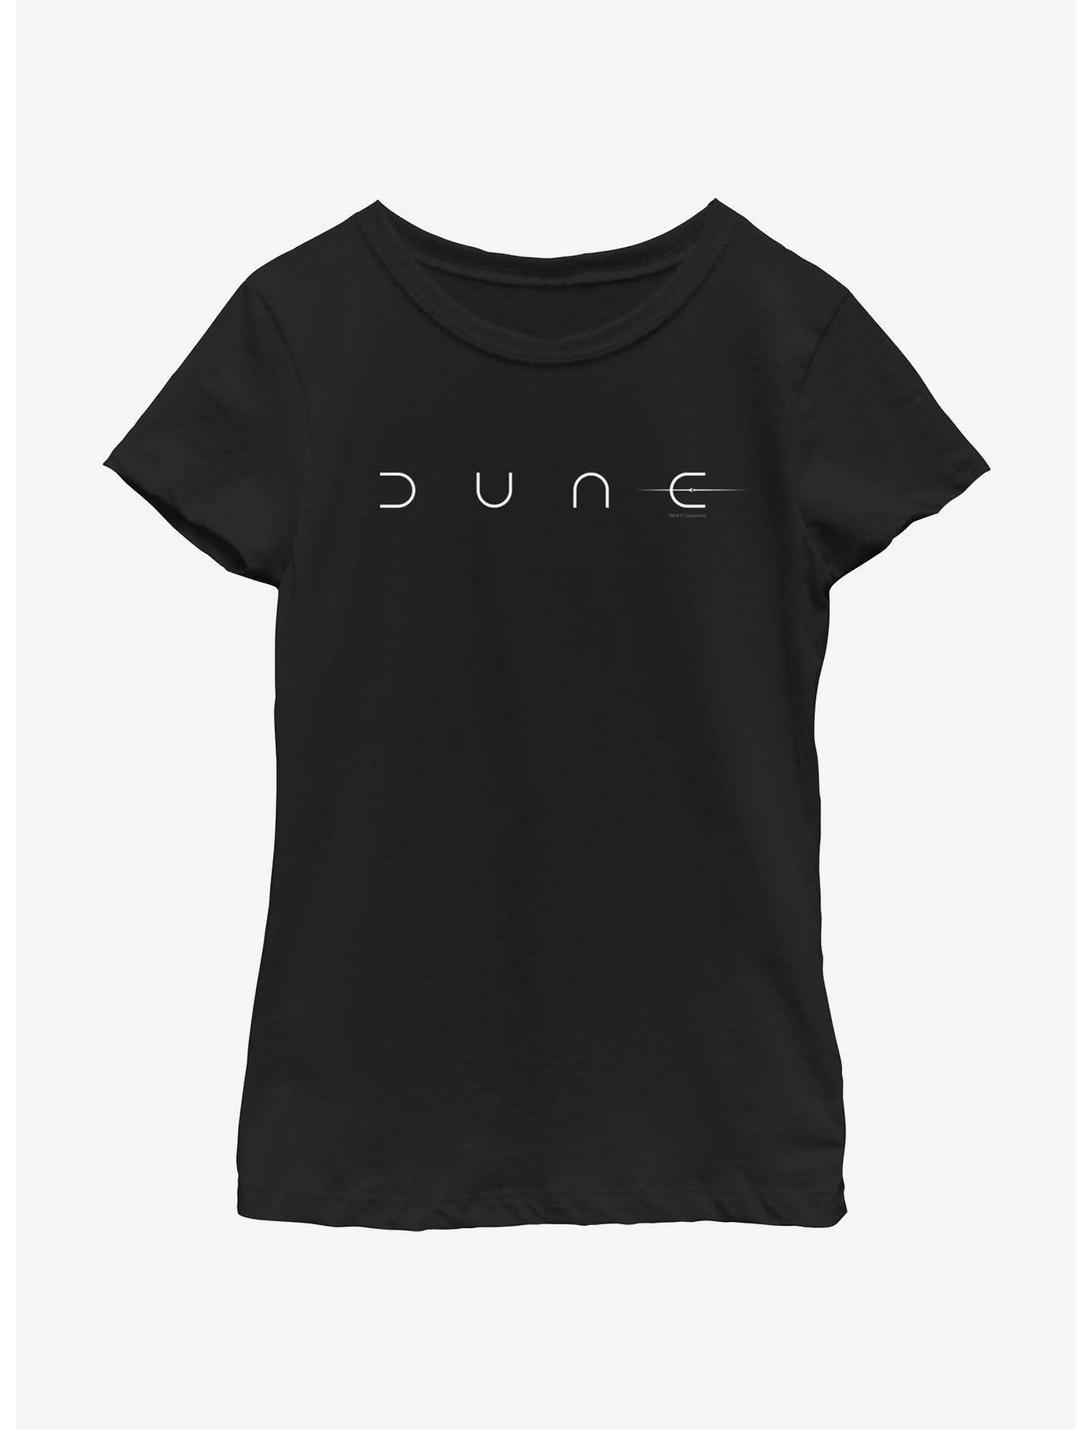 Dune: Part Two Logo Youth Girls T-Shirt, BLACK, hi-res